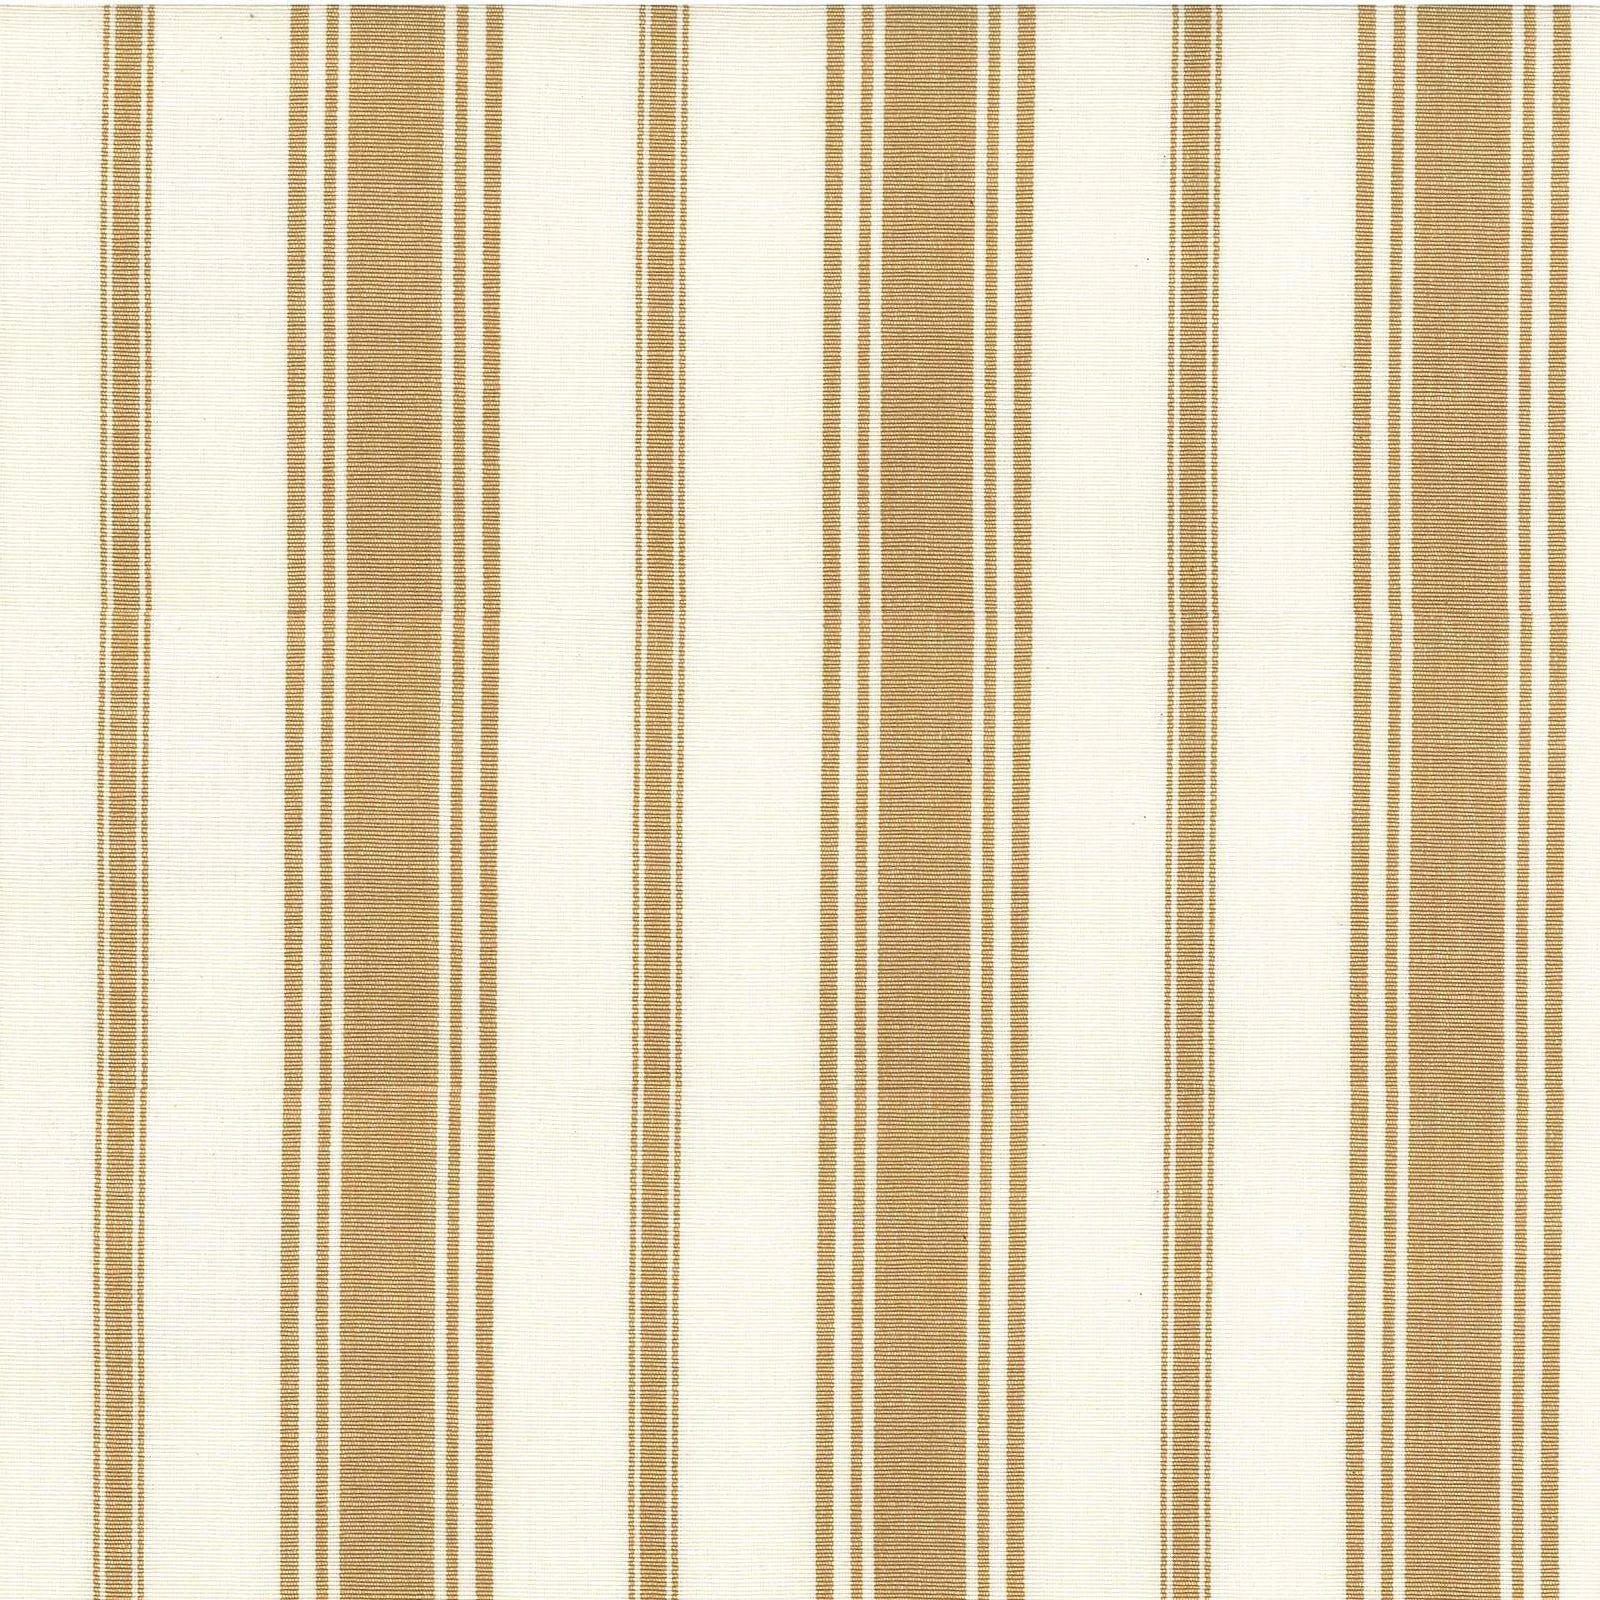 Wentworth Stripe Fabric in Camel